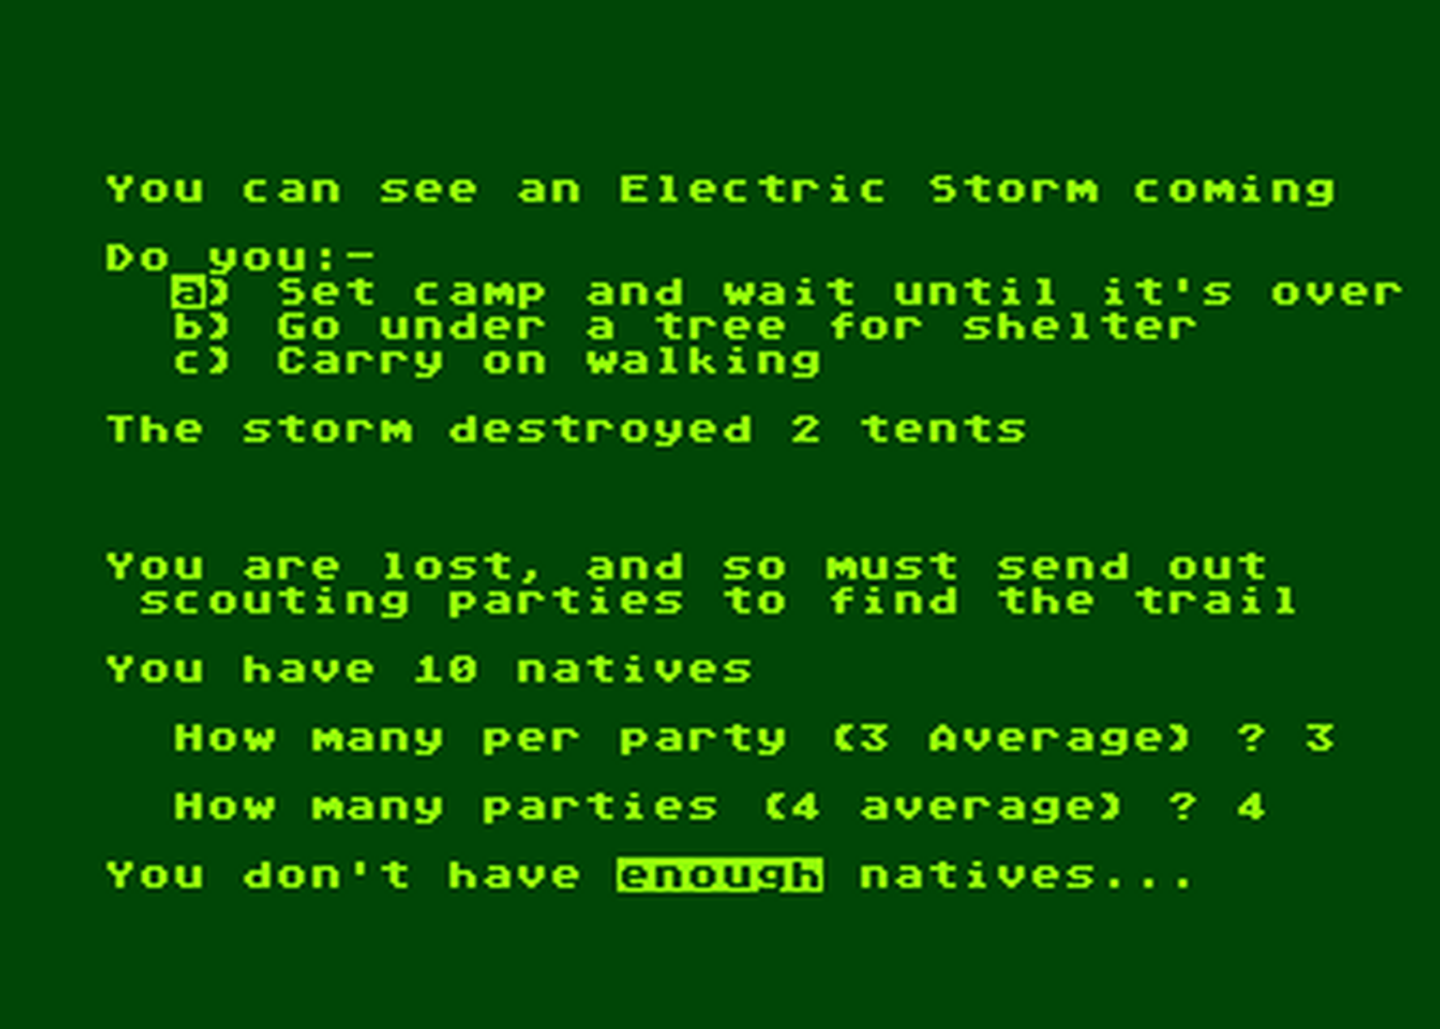 Atari GameBase Elephants_Graveyard Atari_Computing 1984